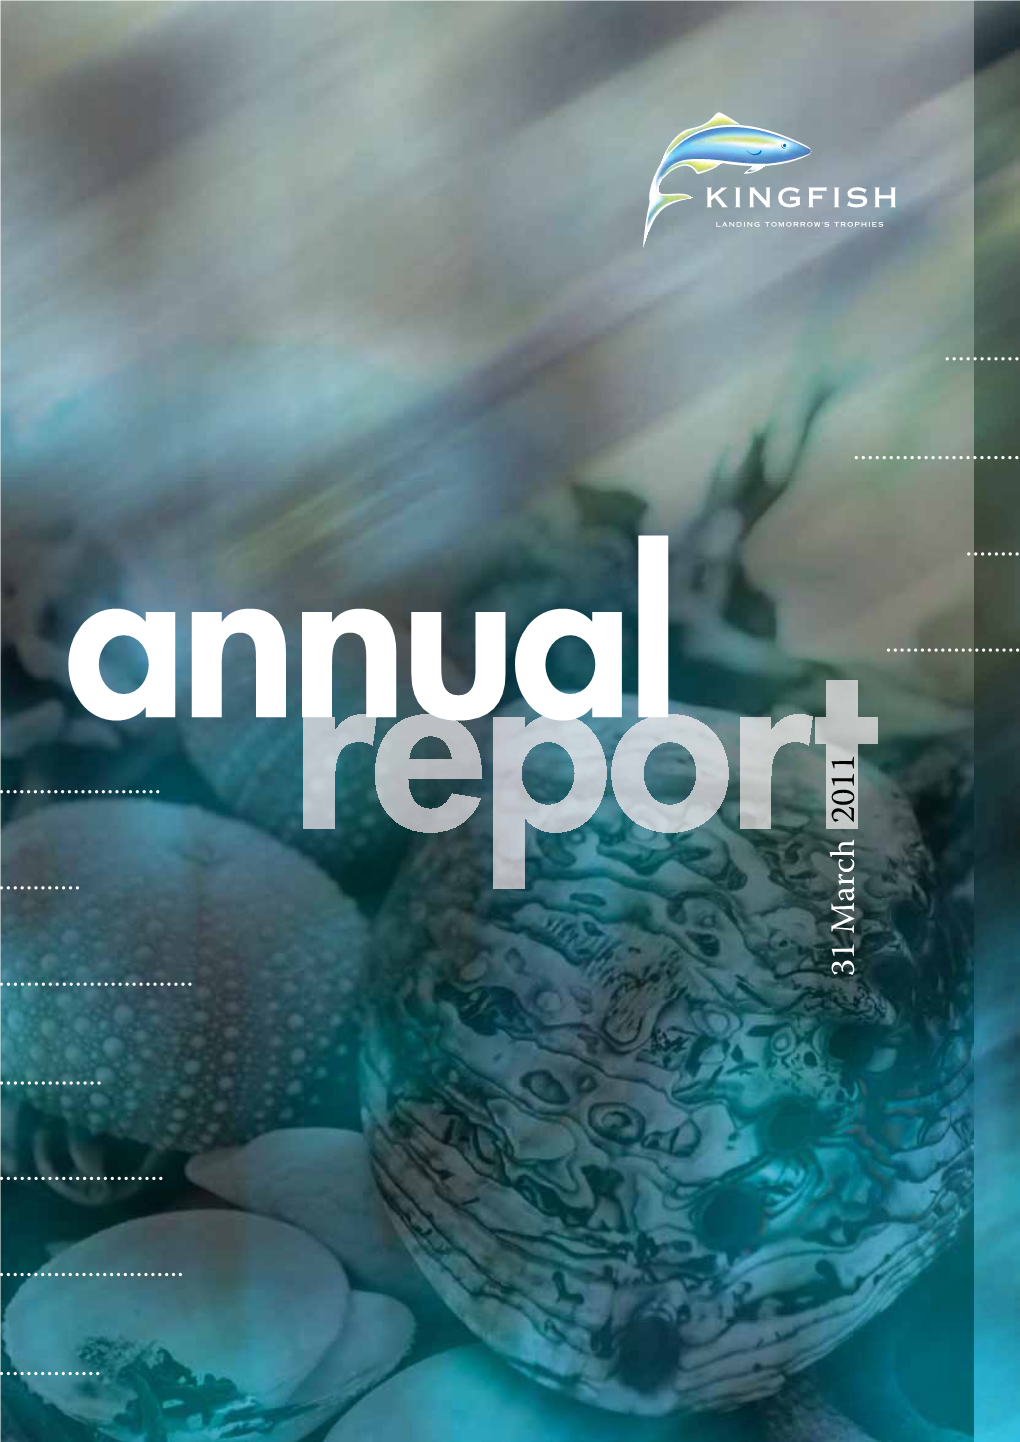 Kingfish-Annual-Report-2011.Pdf